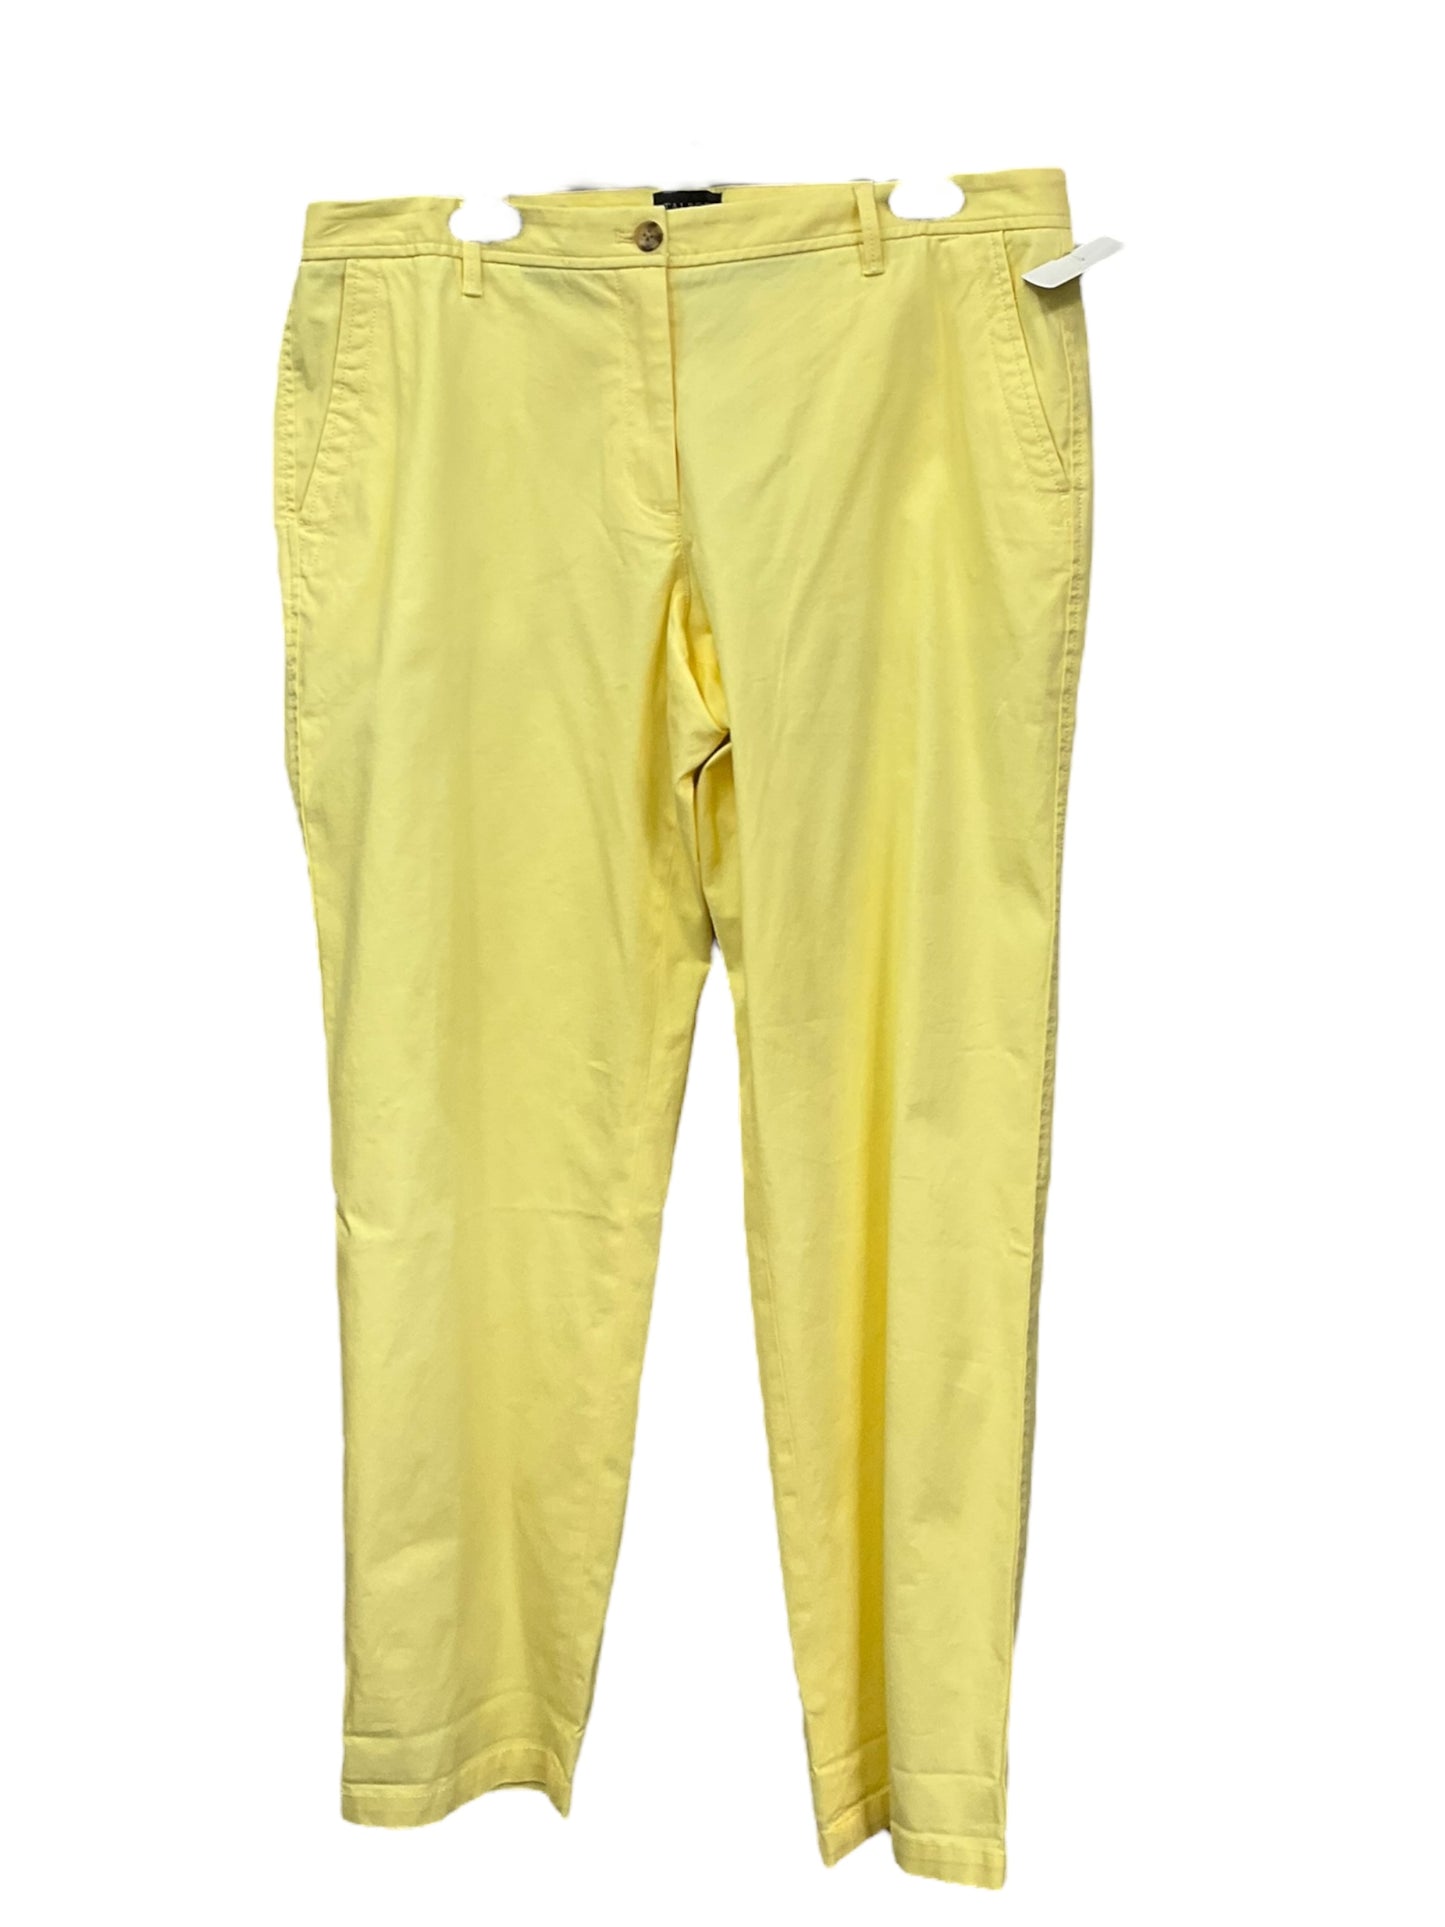 Pants Chinos & Khakis By Talbots  Size: 12